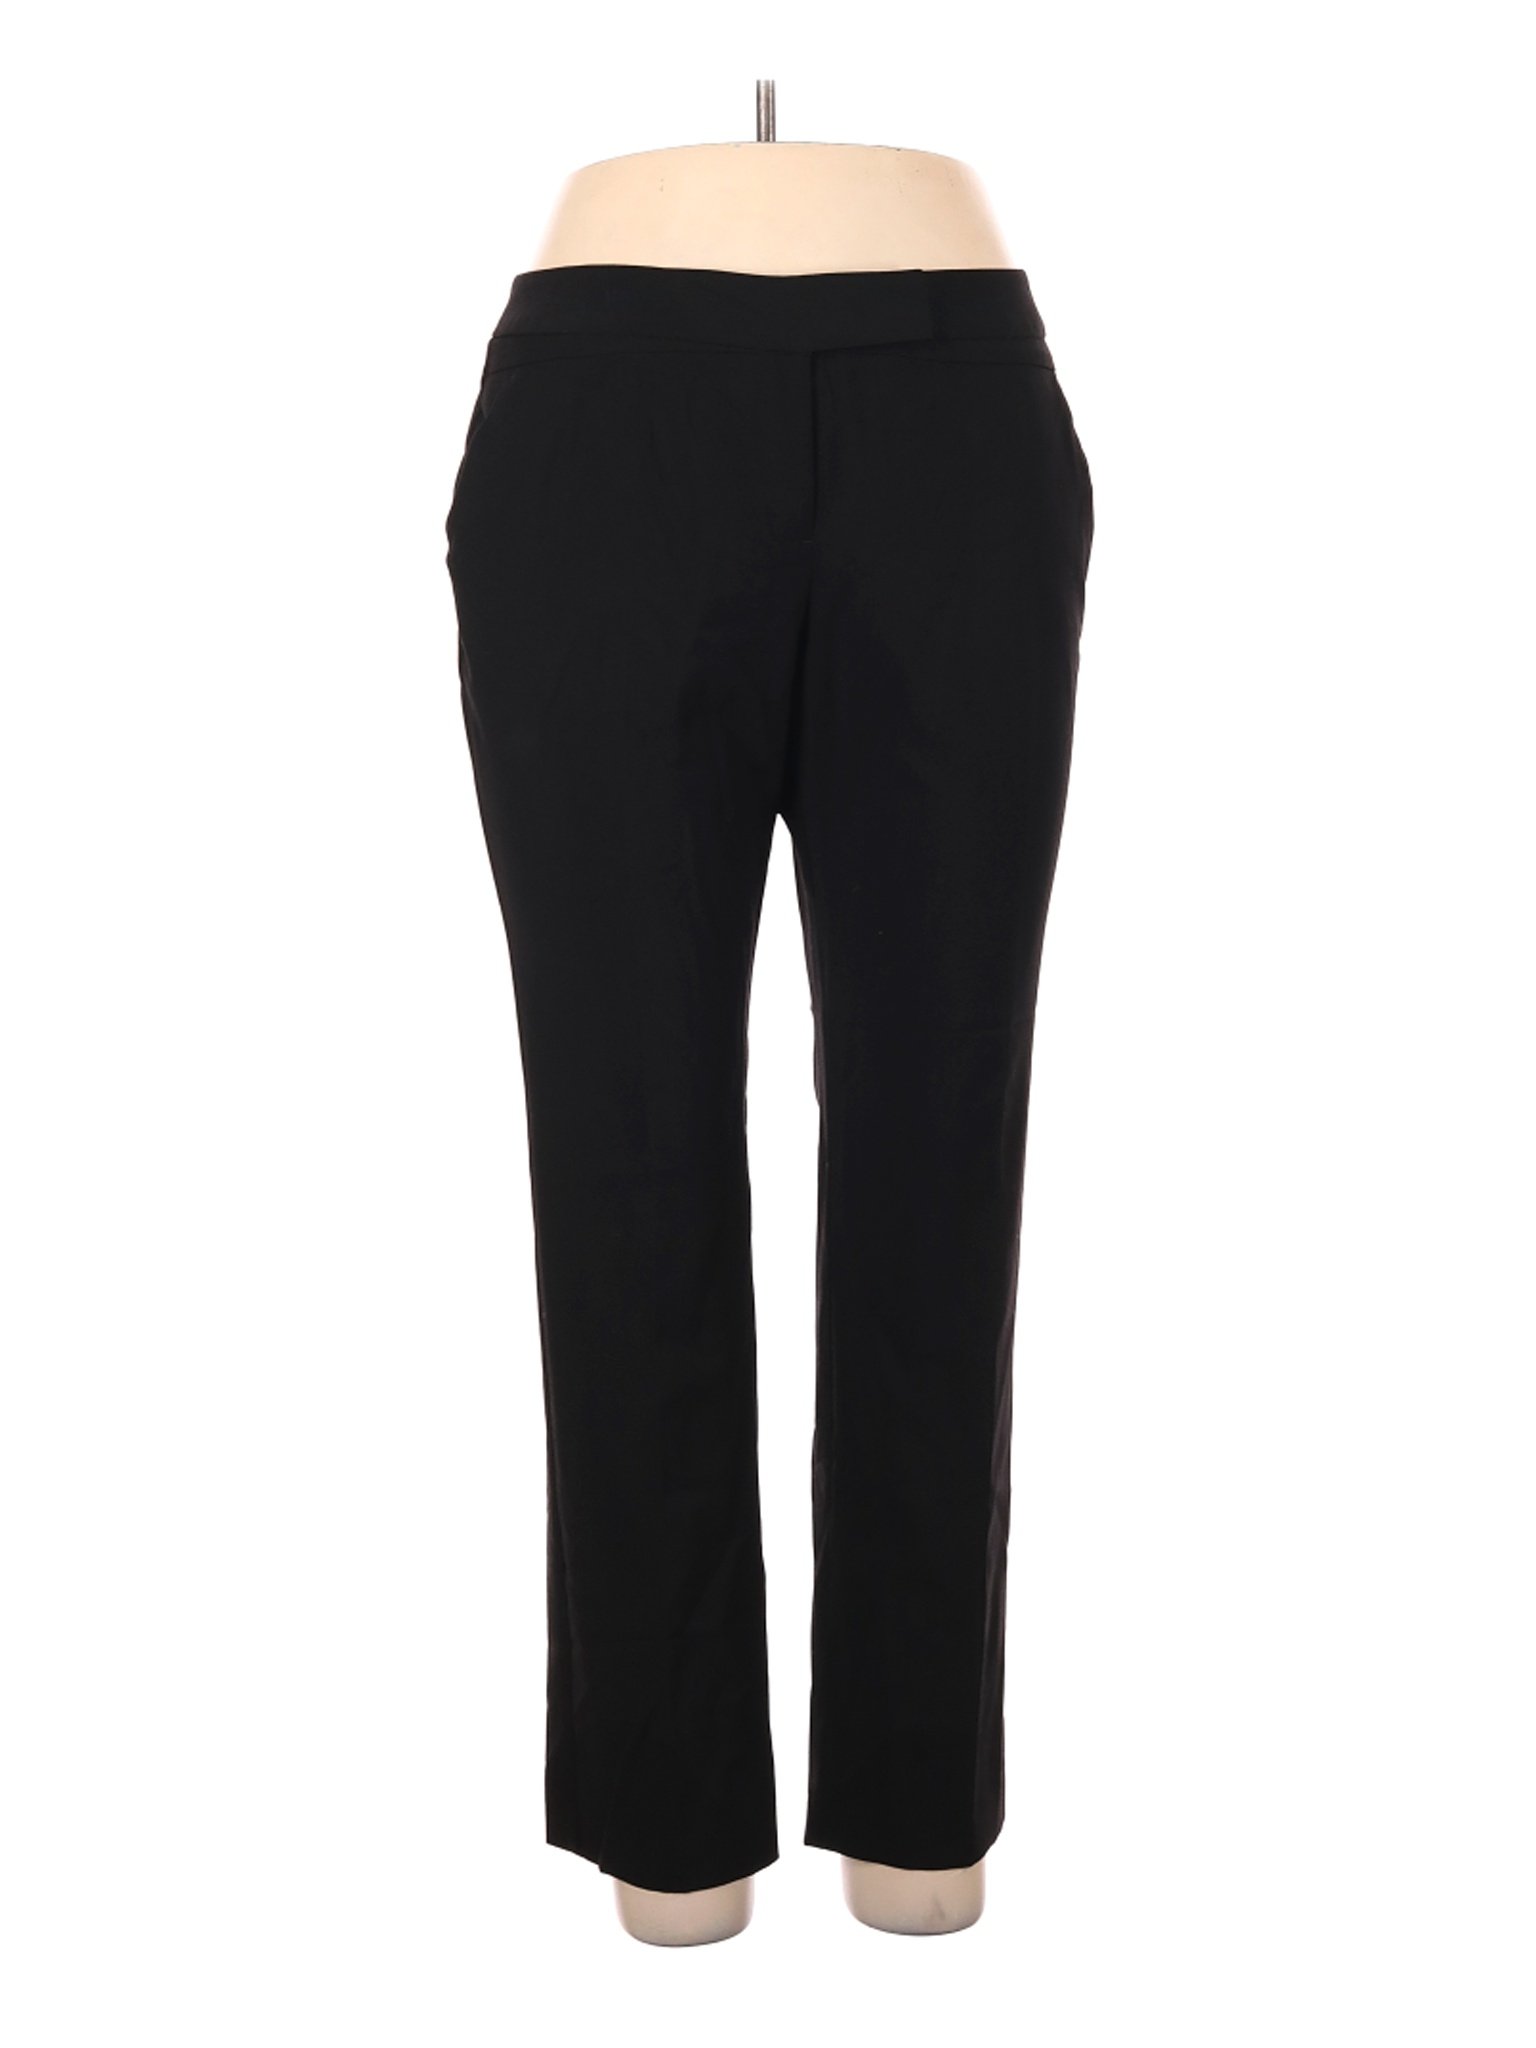 Worthington Women Black Dress Pants 14 Petites | eBay